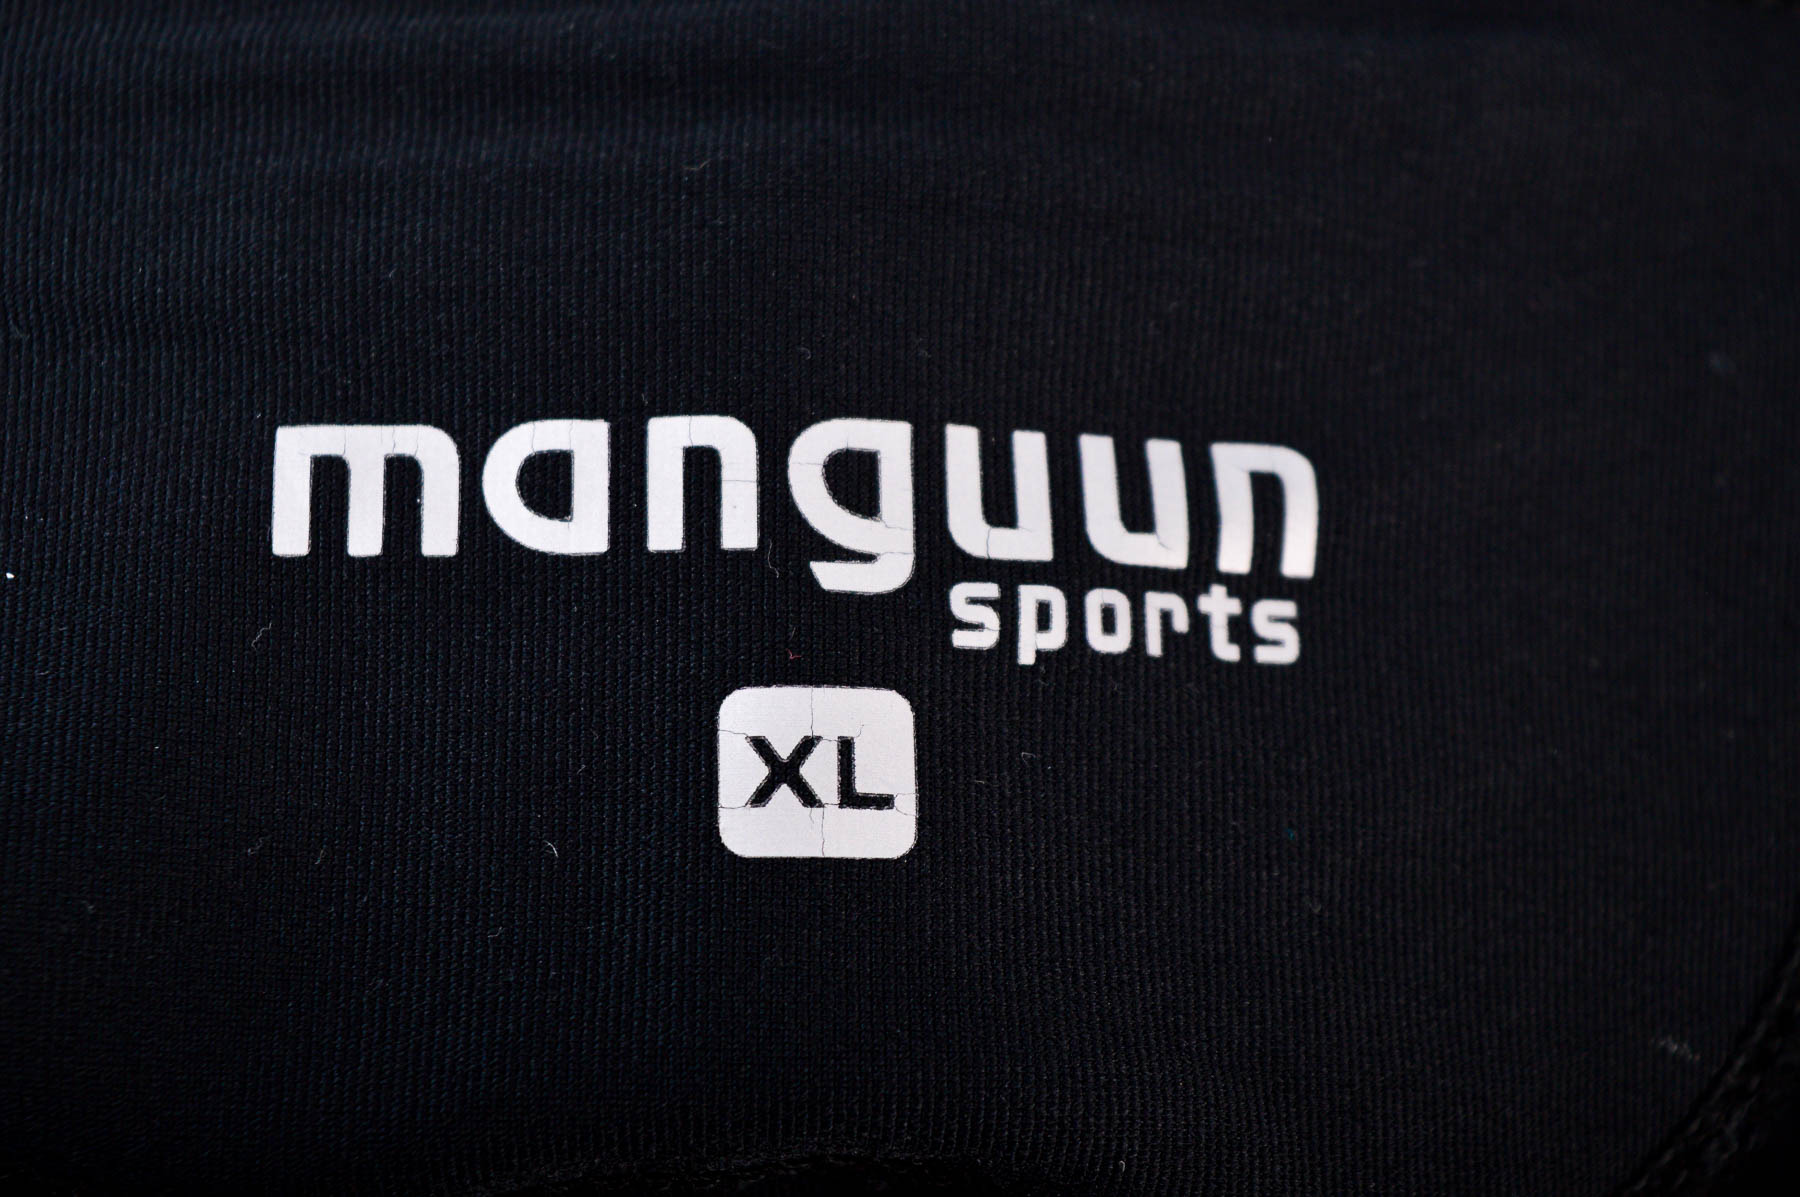 Male sports wear - Manguun sports - 2